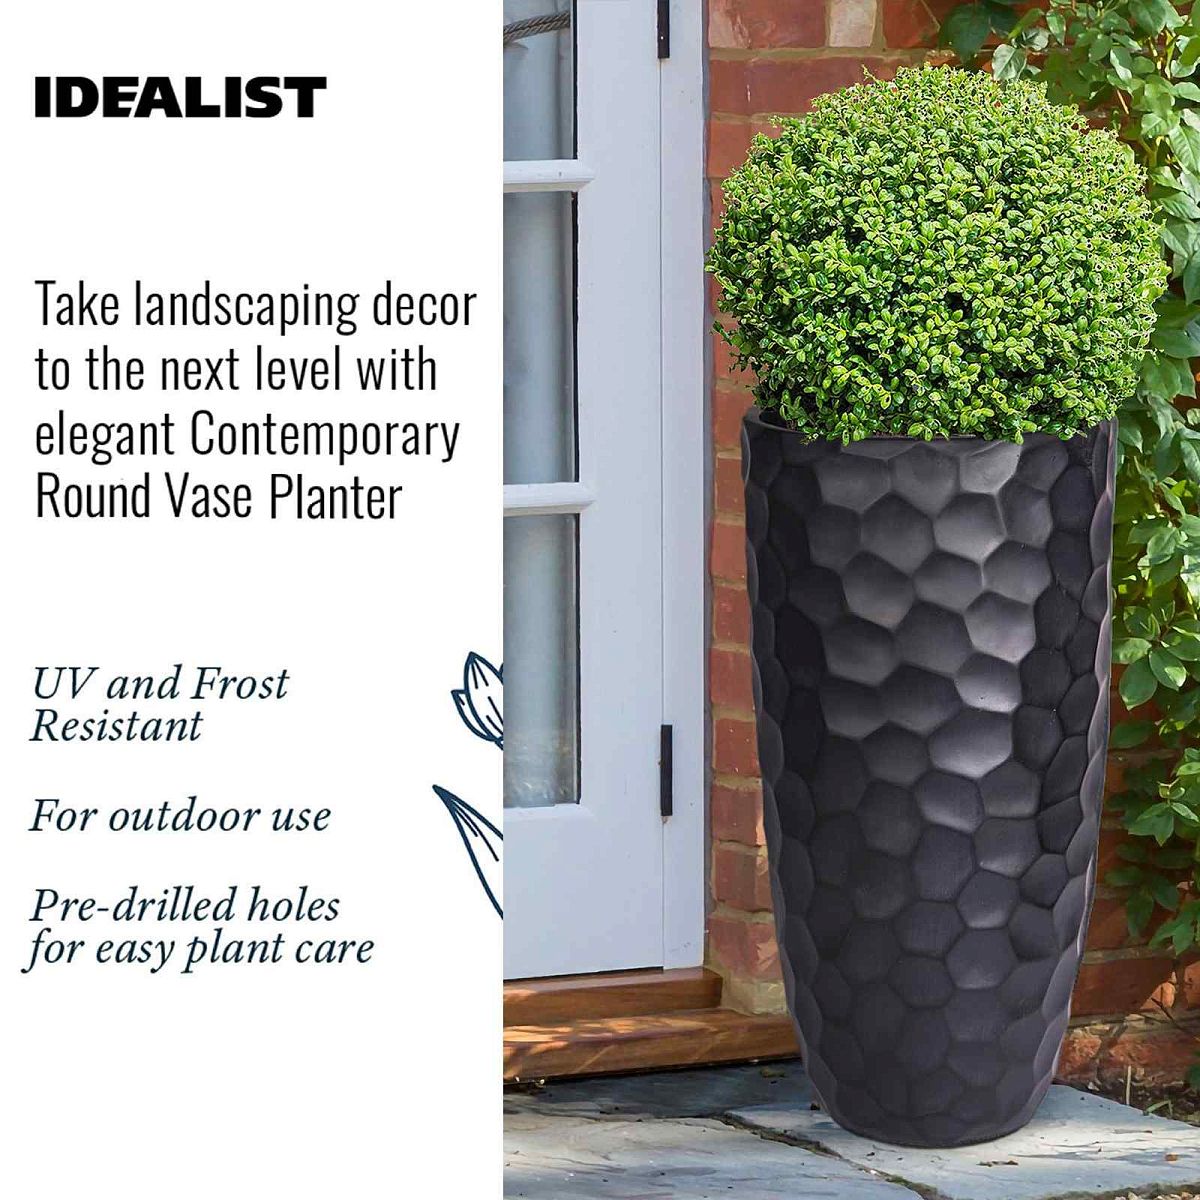 IDEALIST Lite Mosaic Style Tall Round Vase Planter Outdoor Plant Pot